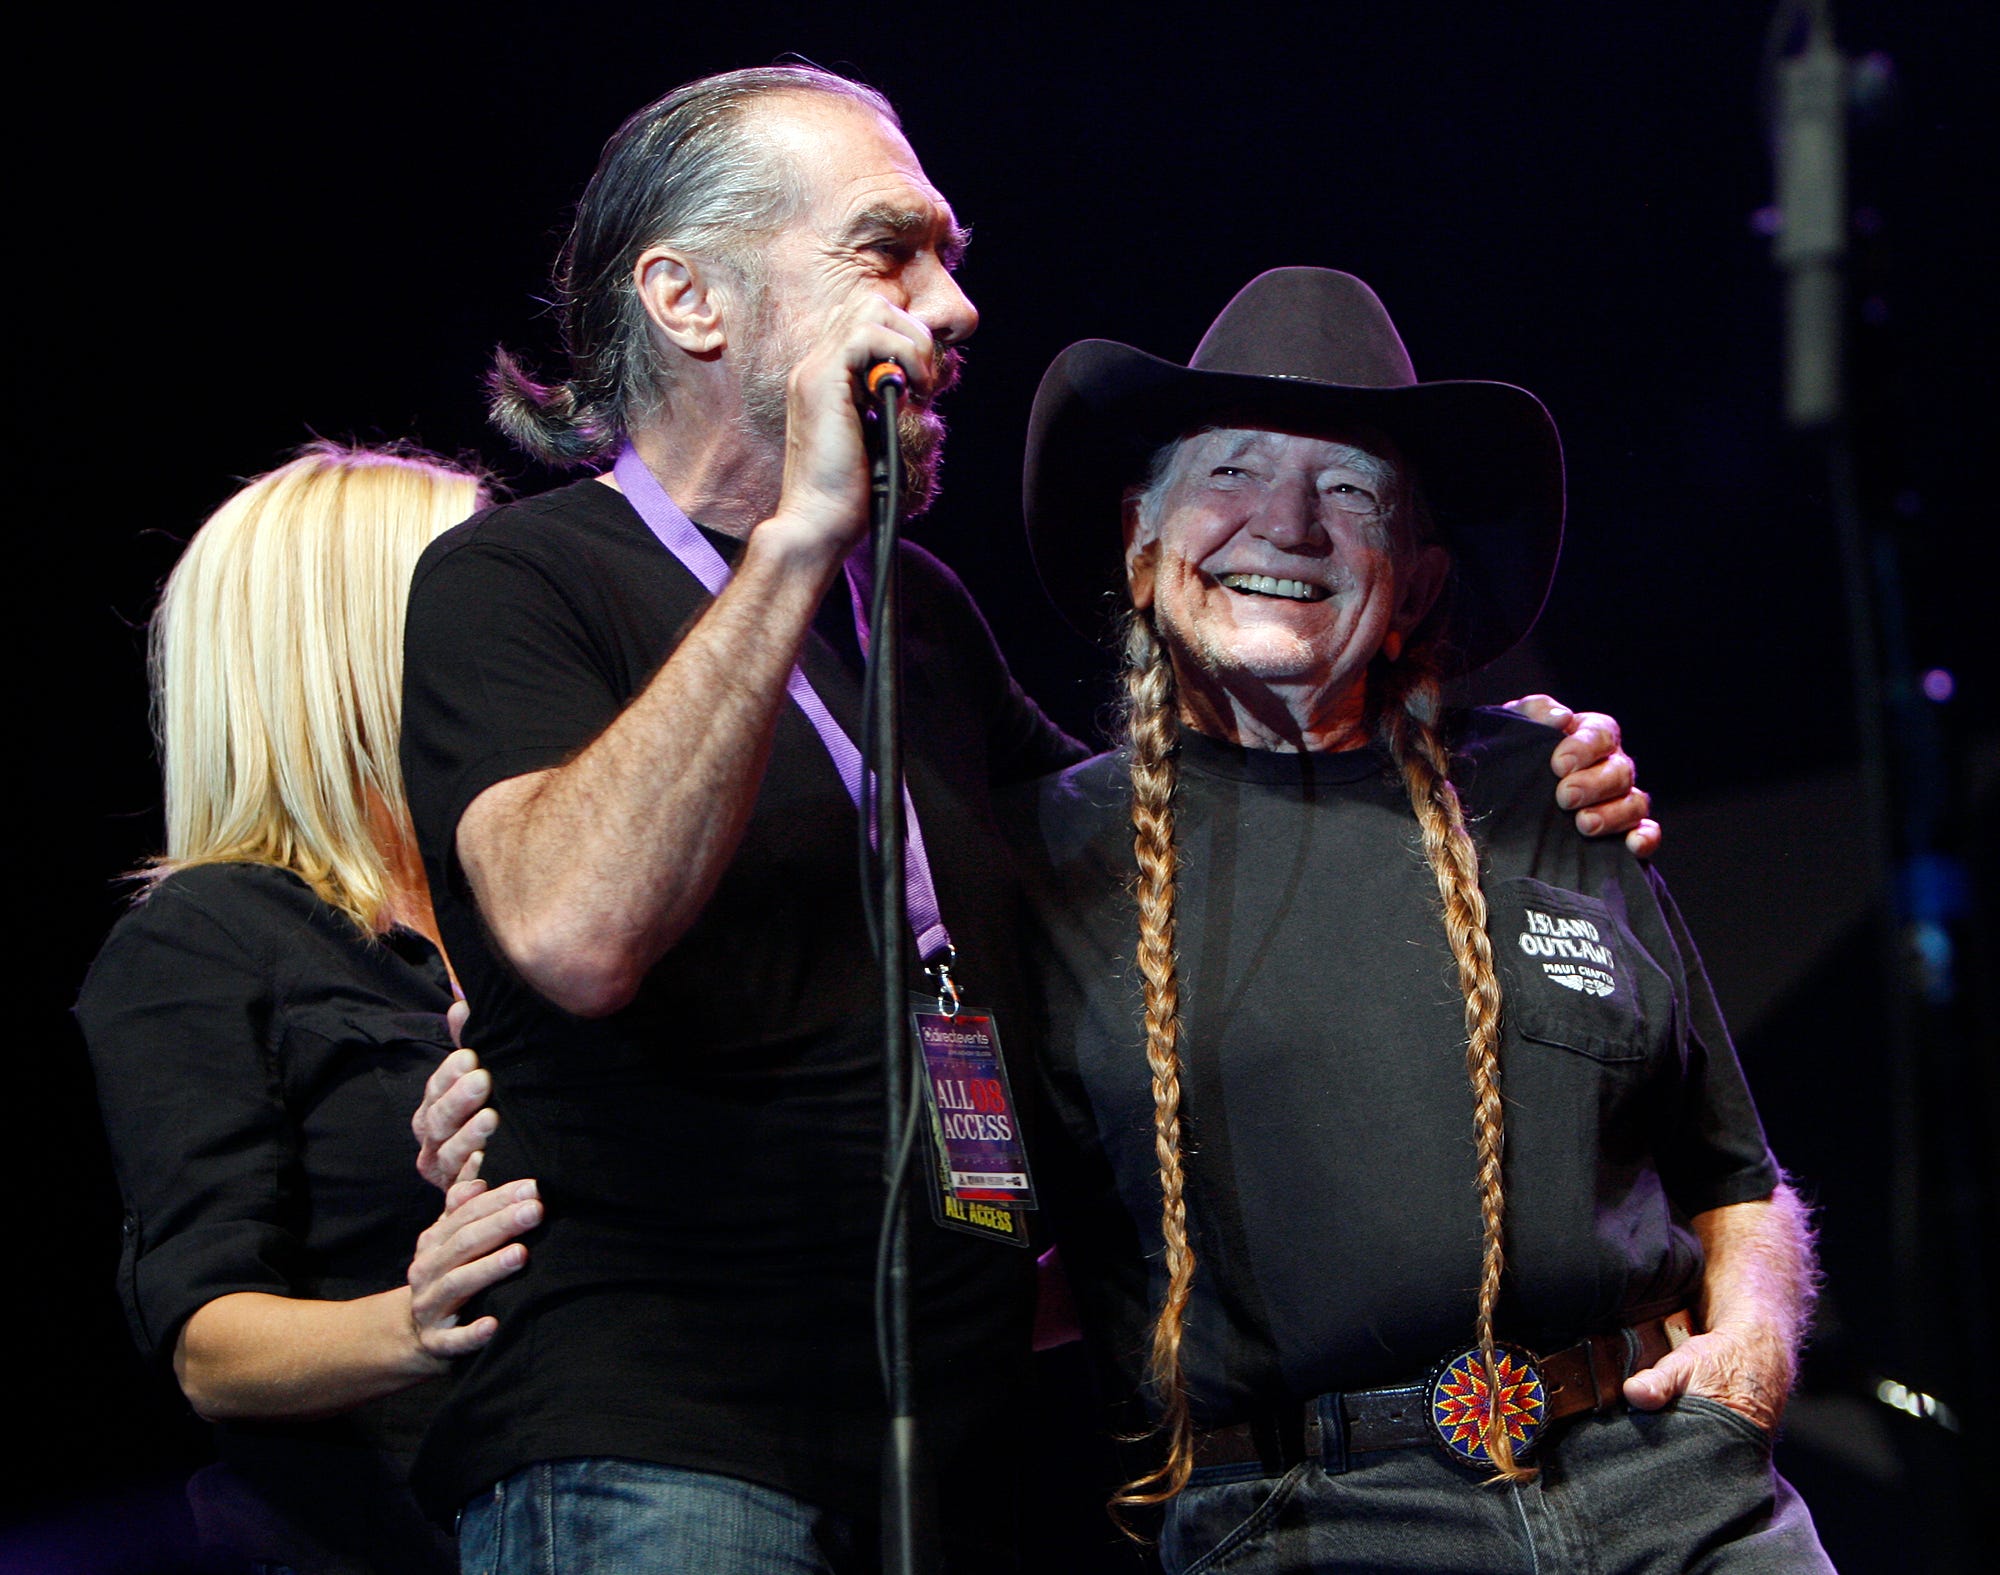 John Paul DeJoria introduces Willie Nelson at The Backyard on Sunday, October 26, 2008.